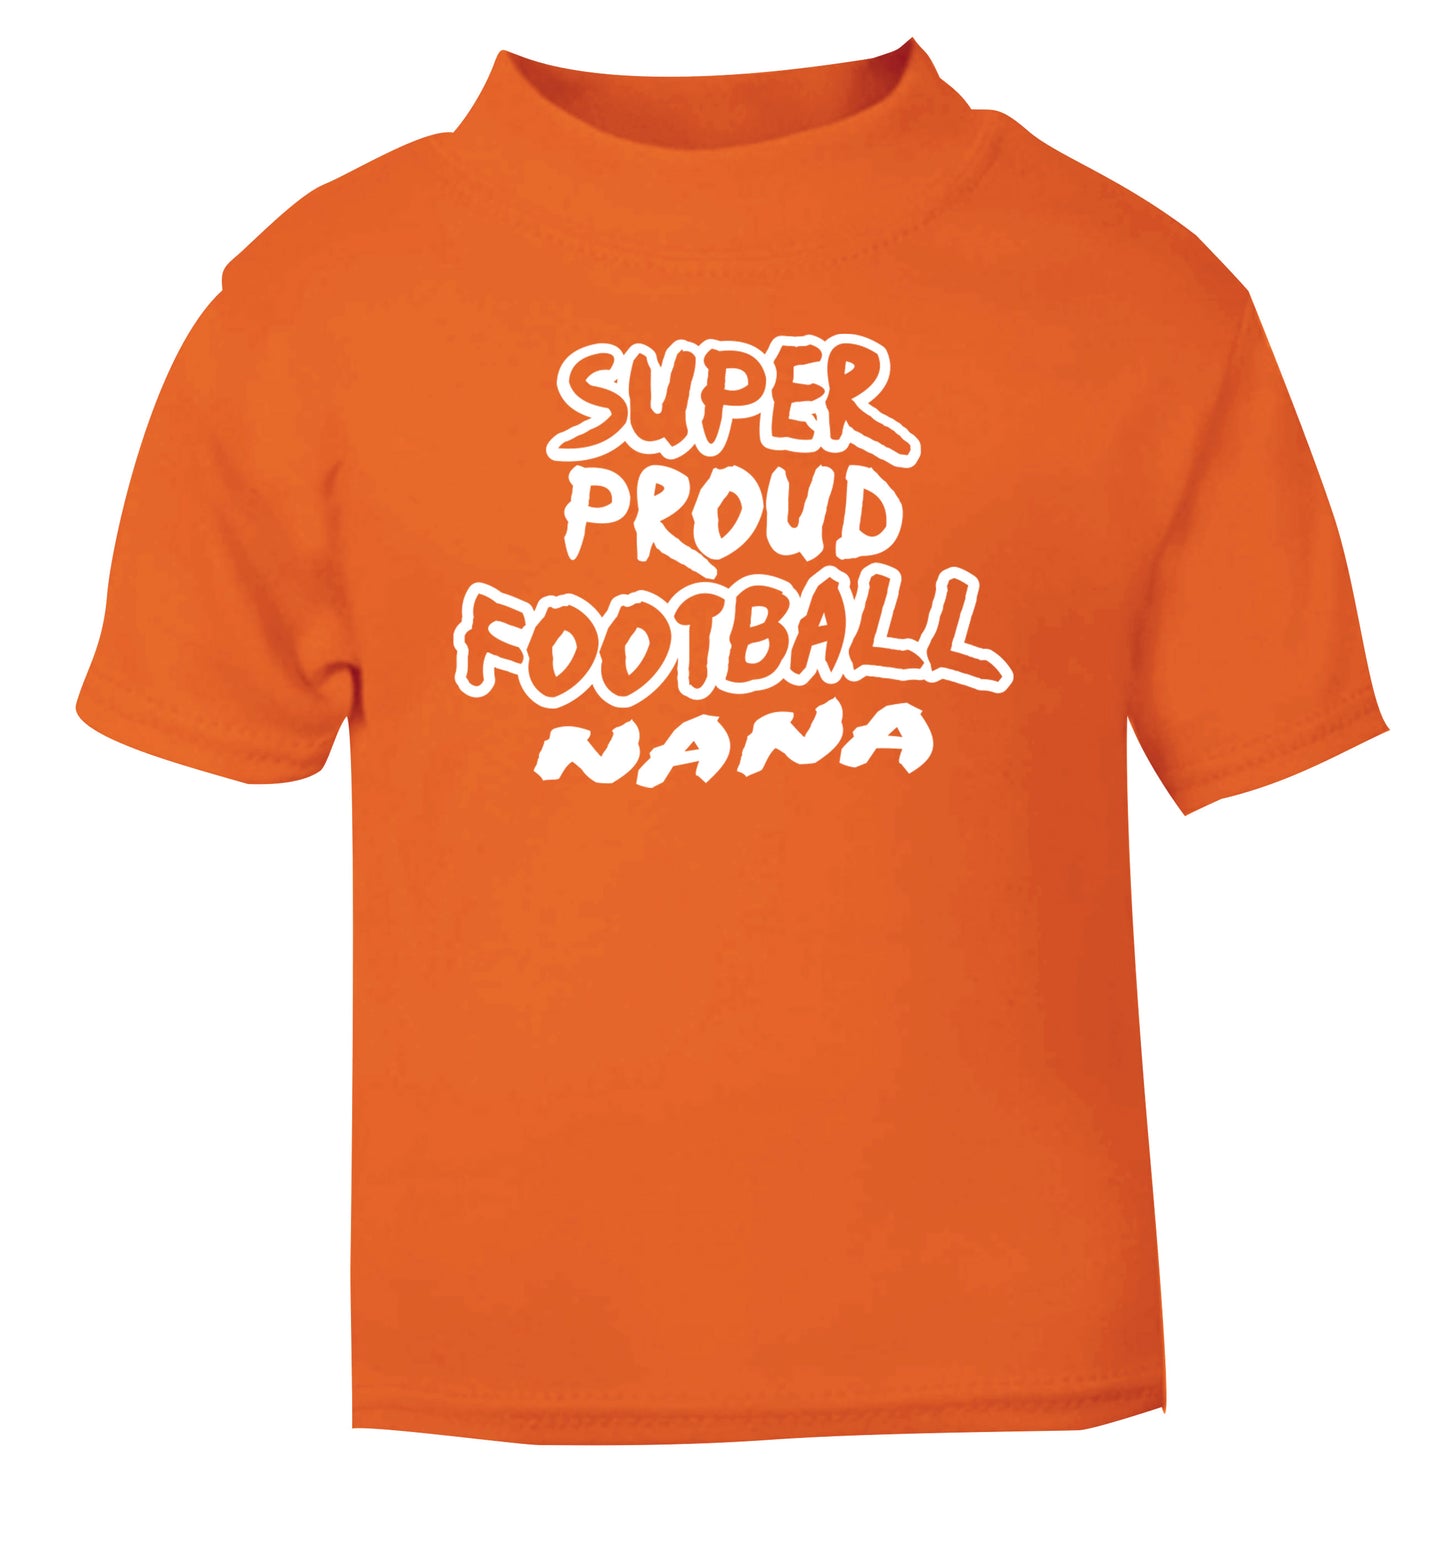 Super proud football nana orange Baby Toddler Tshirt 2 Years